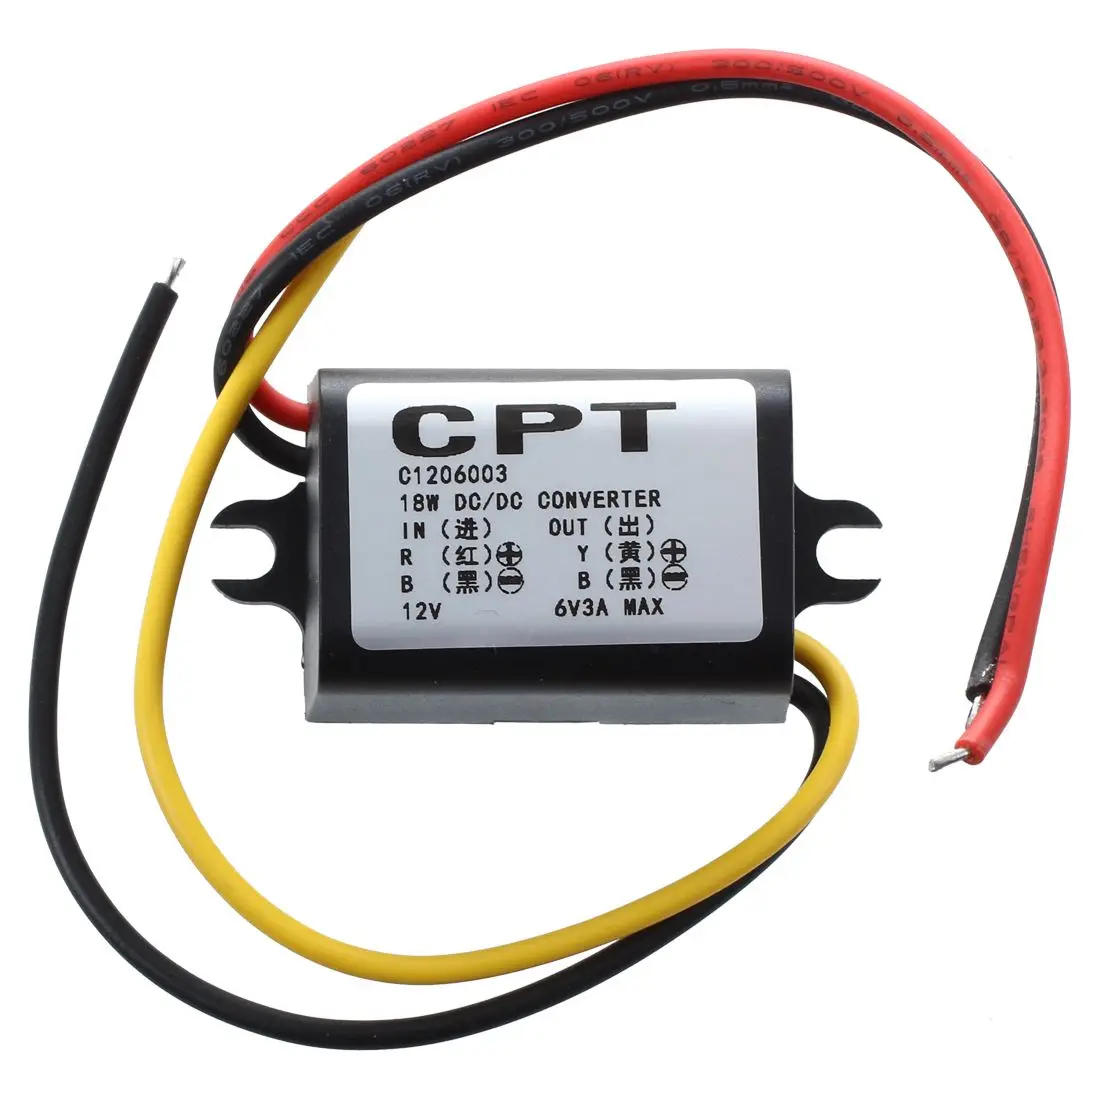 12V to 6V DC-DC CPT  Converter Step Down Module Power Supply Voltage Regulator